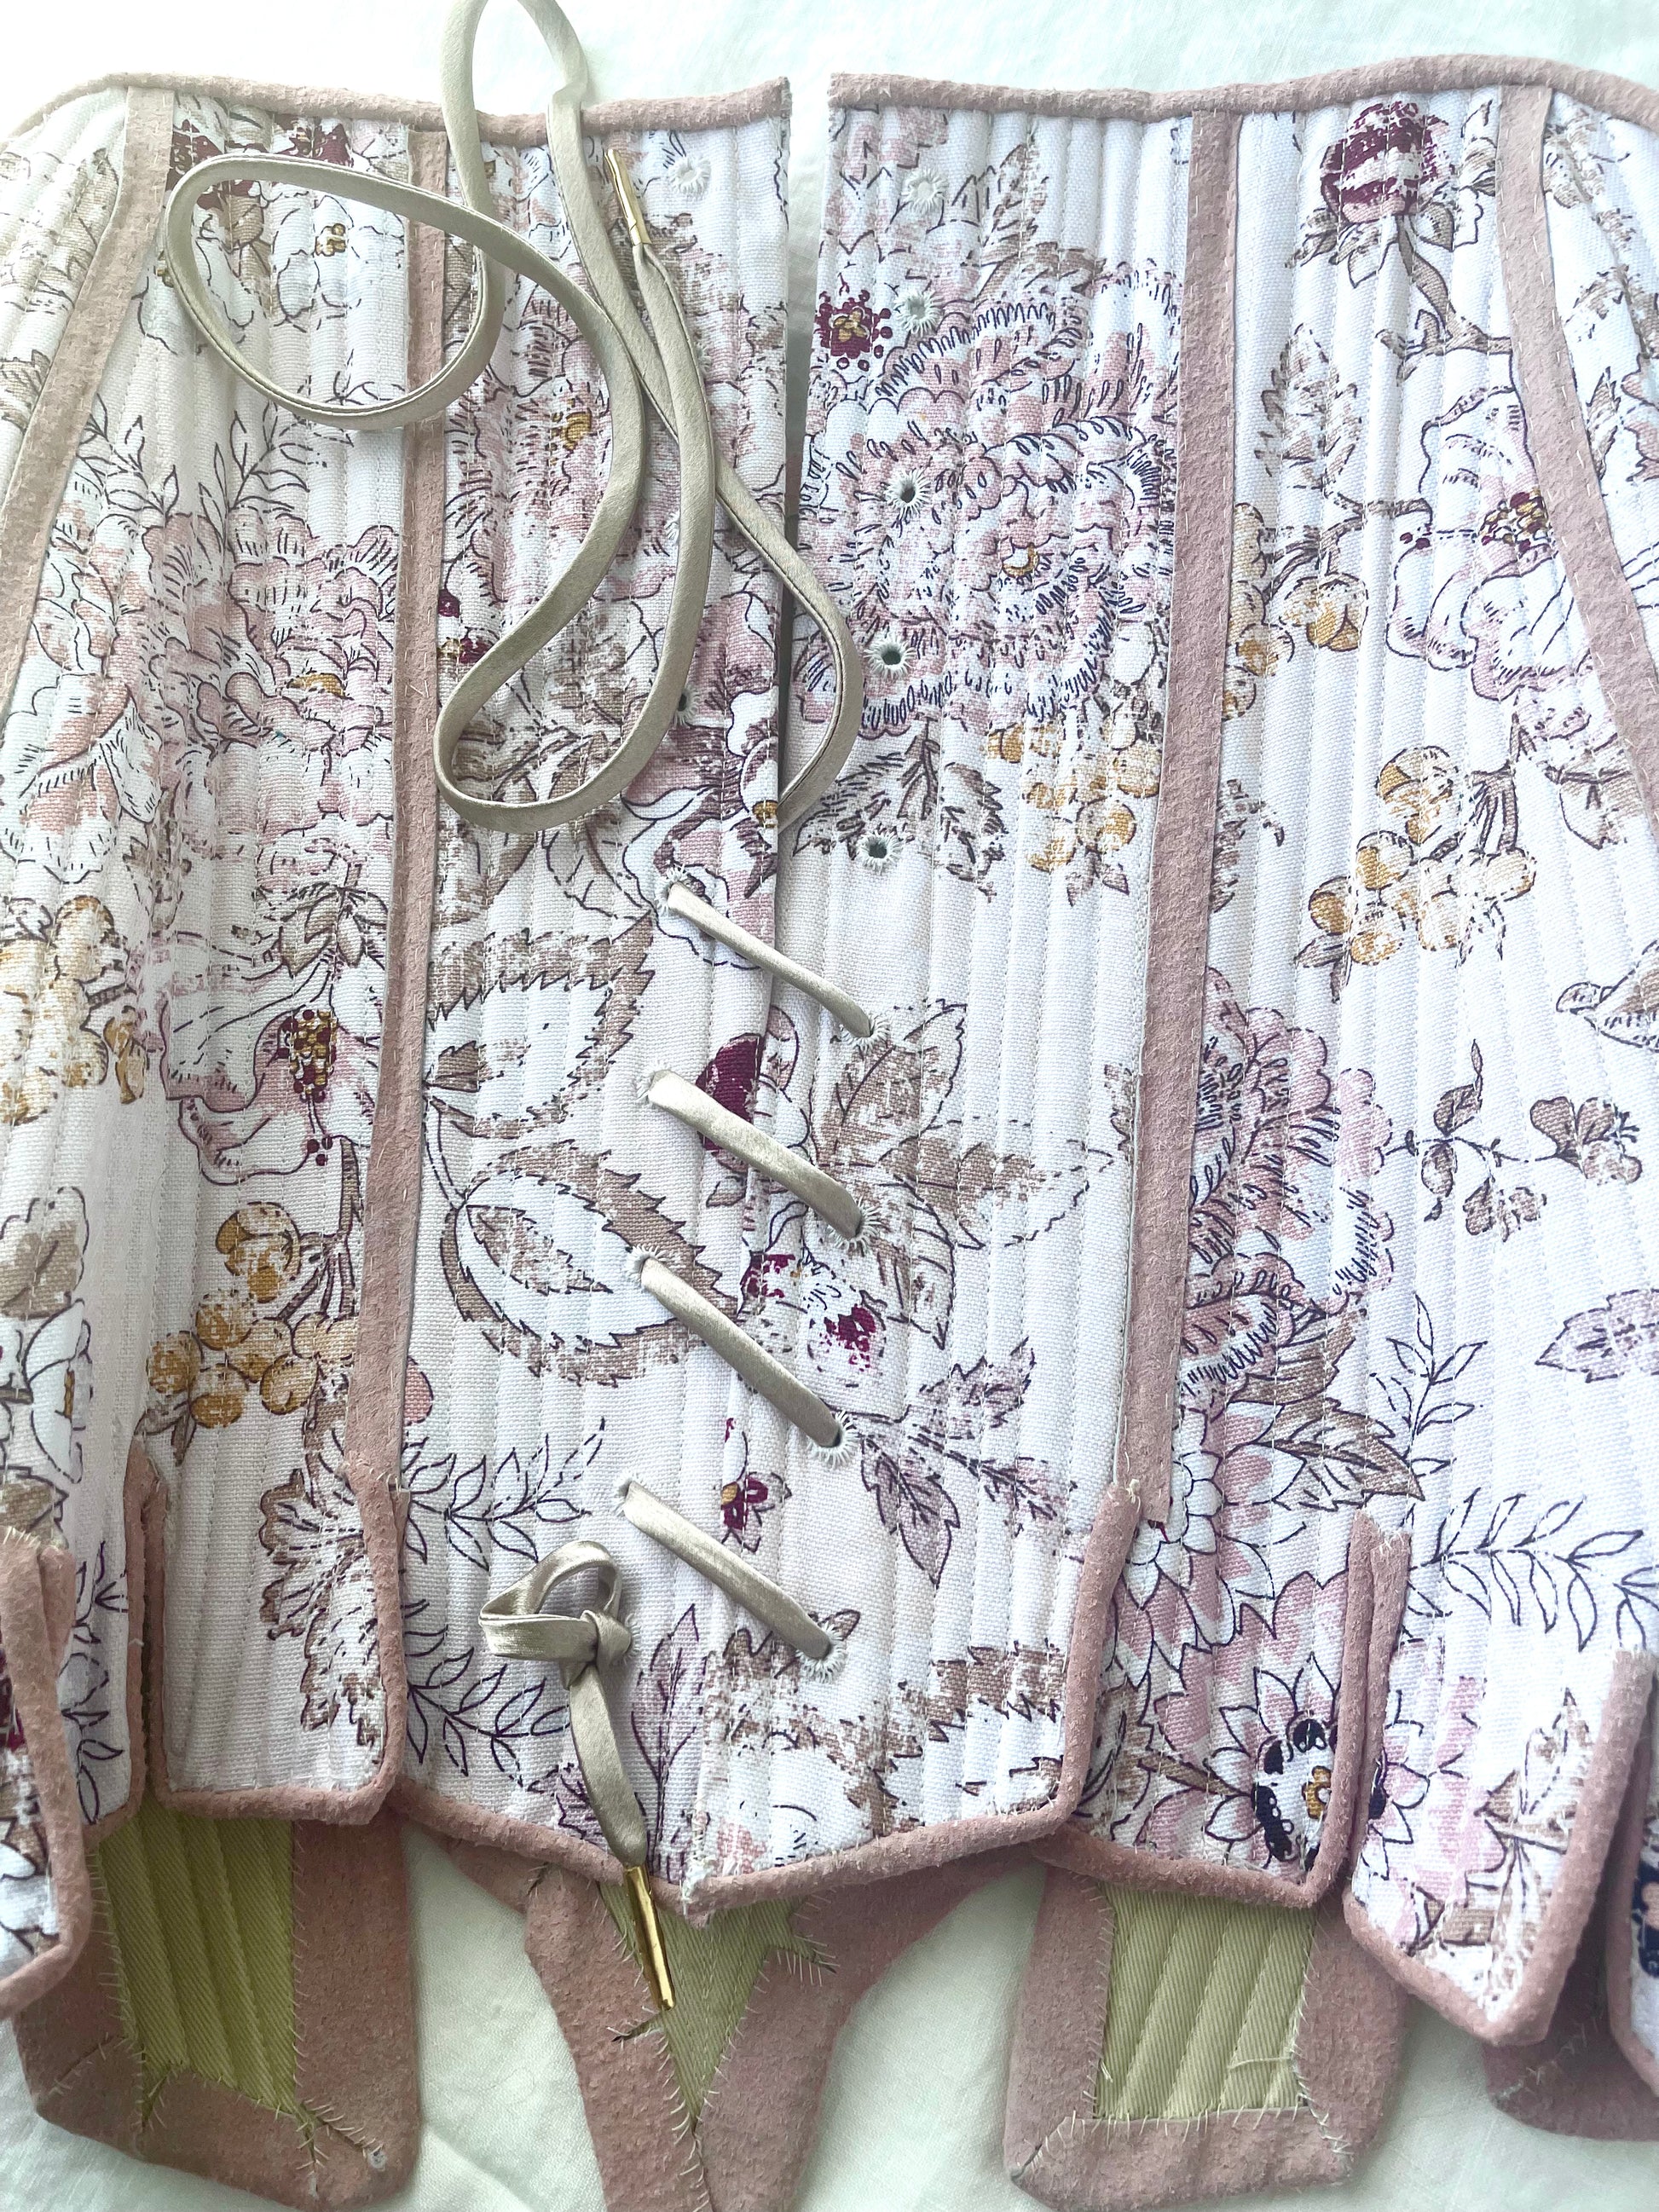 18th century fully boned stays corset - Custom at Nemuro-Corsets